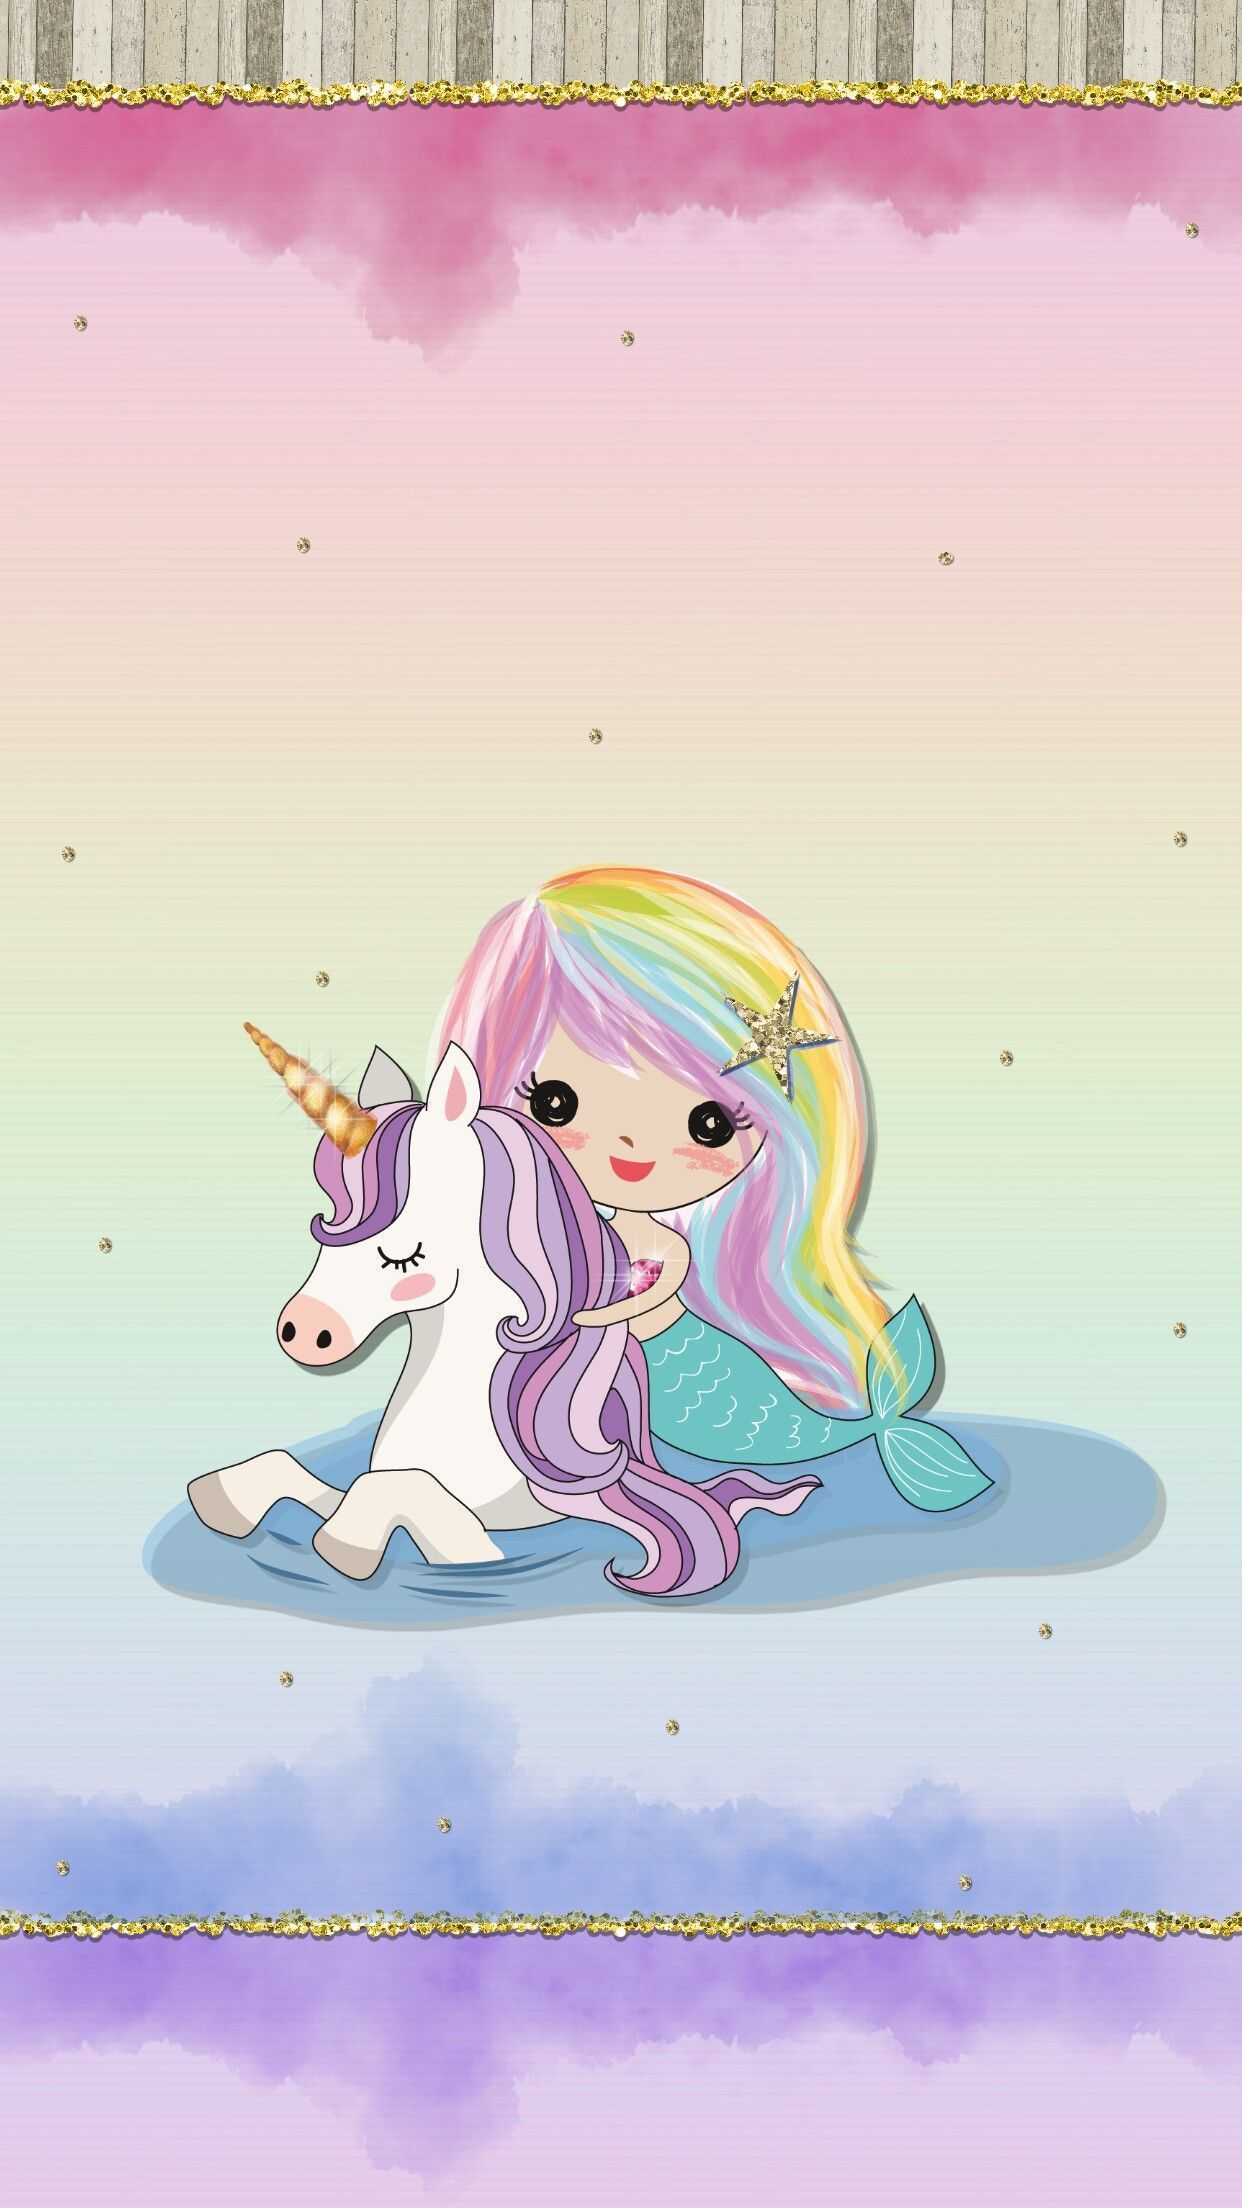 A mermaid and unicorn sitting on a rainbow background - Mermaid